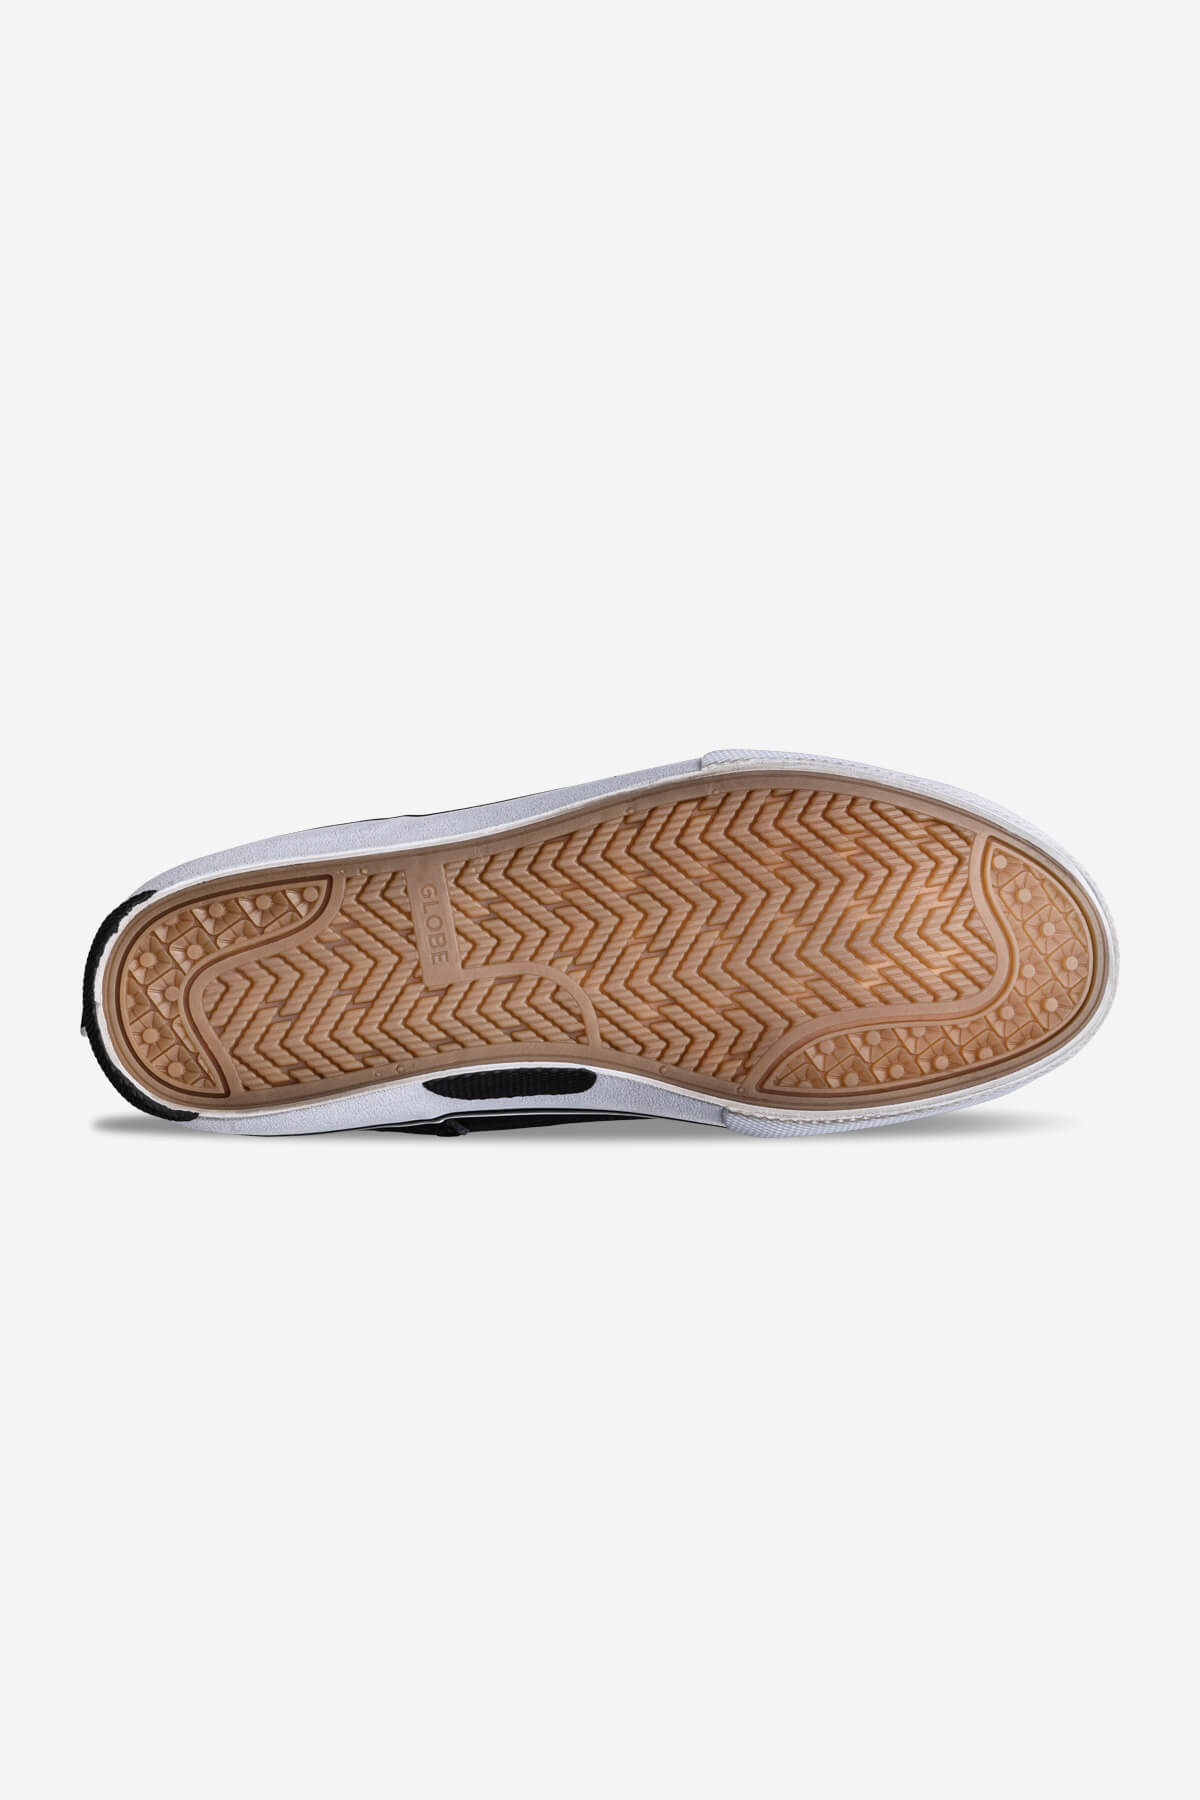 Globe Mid chaussures Dimension skateboard  chaussures en Black/White/Gum